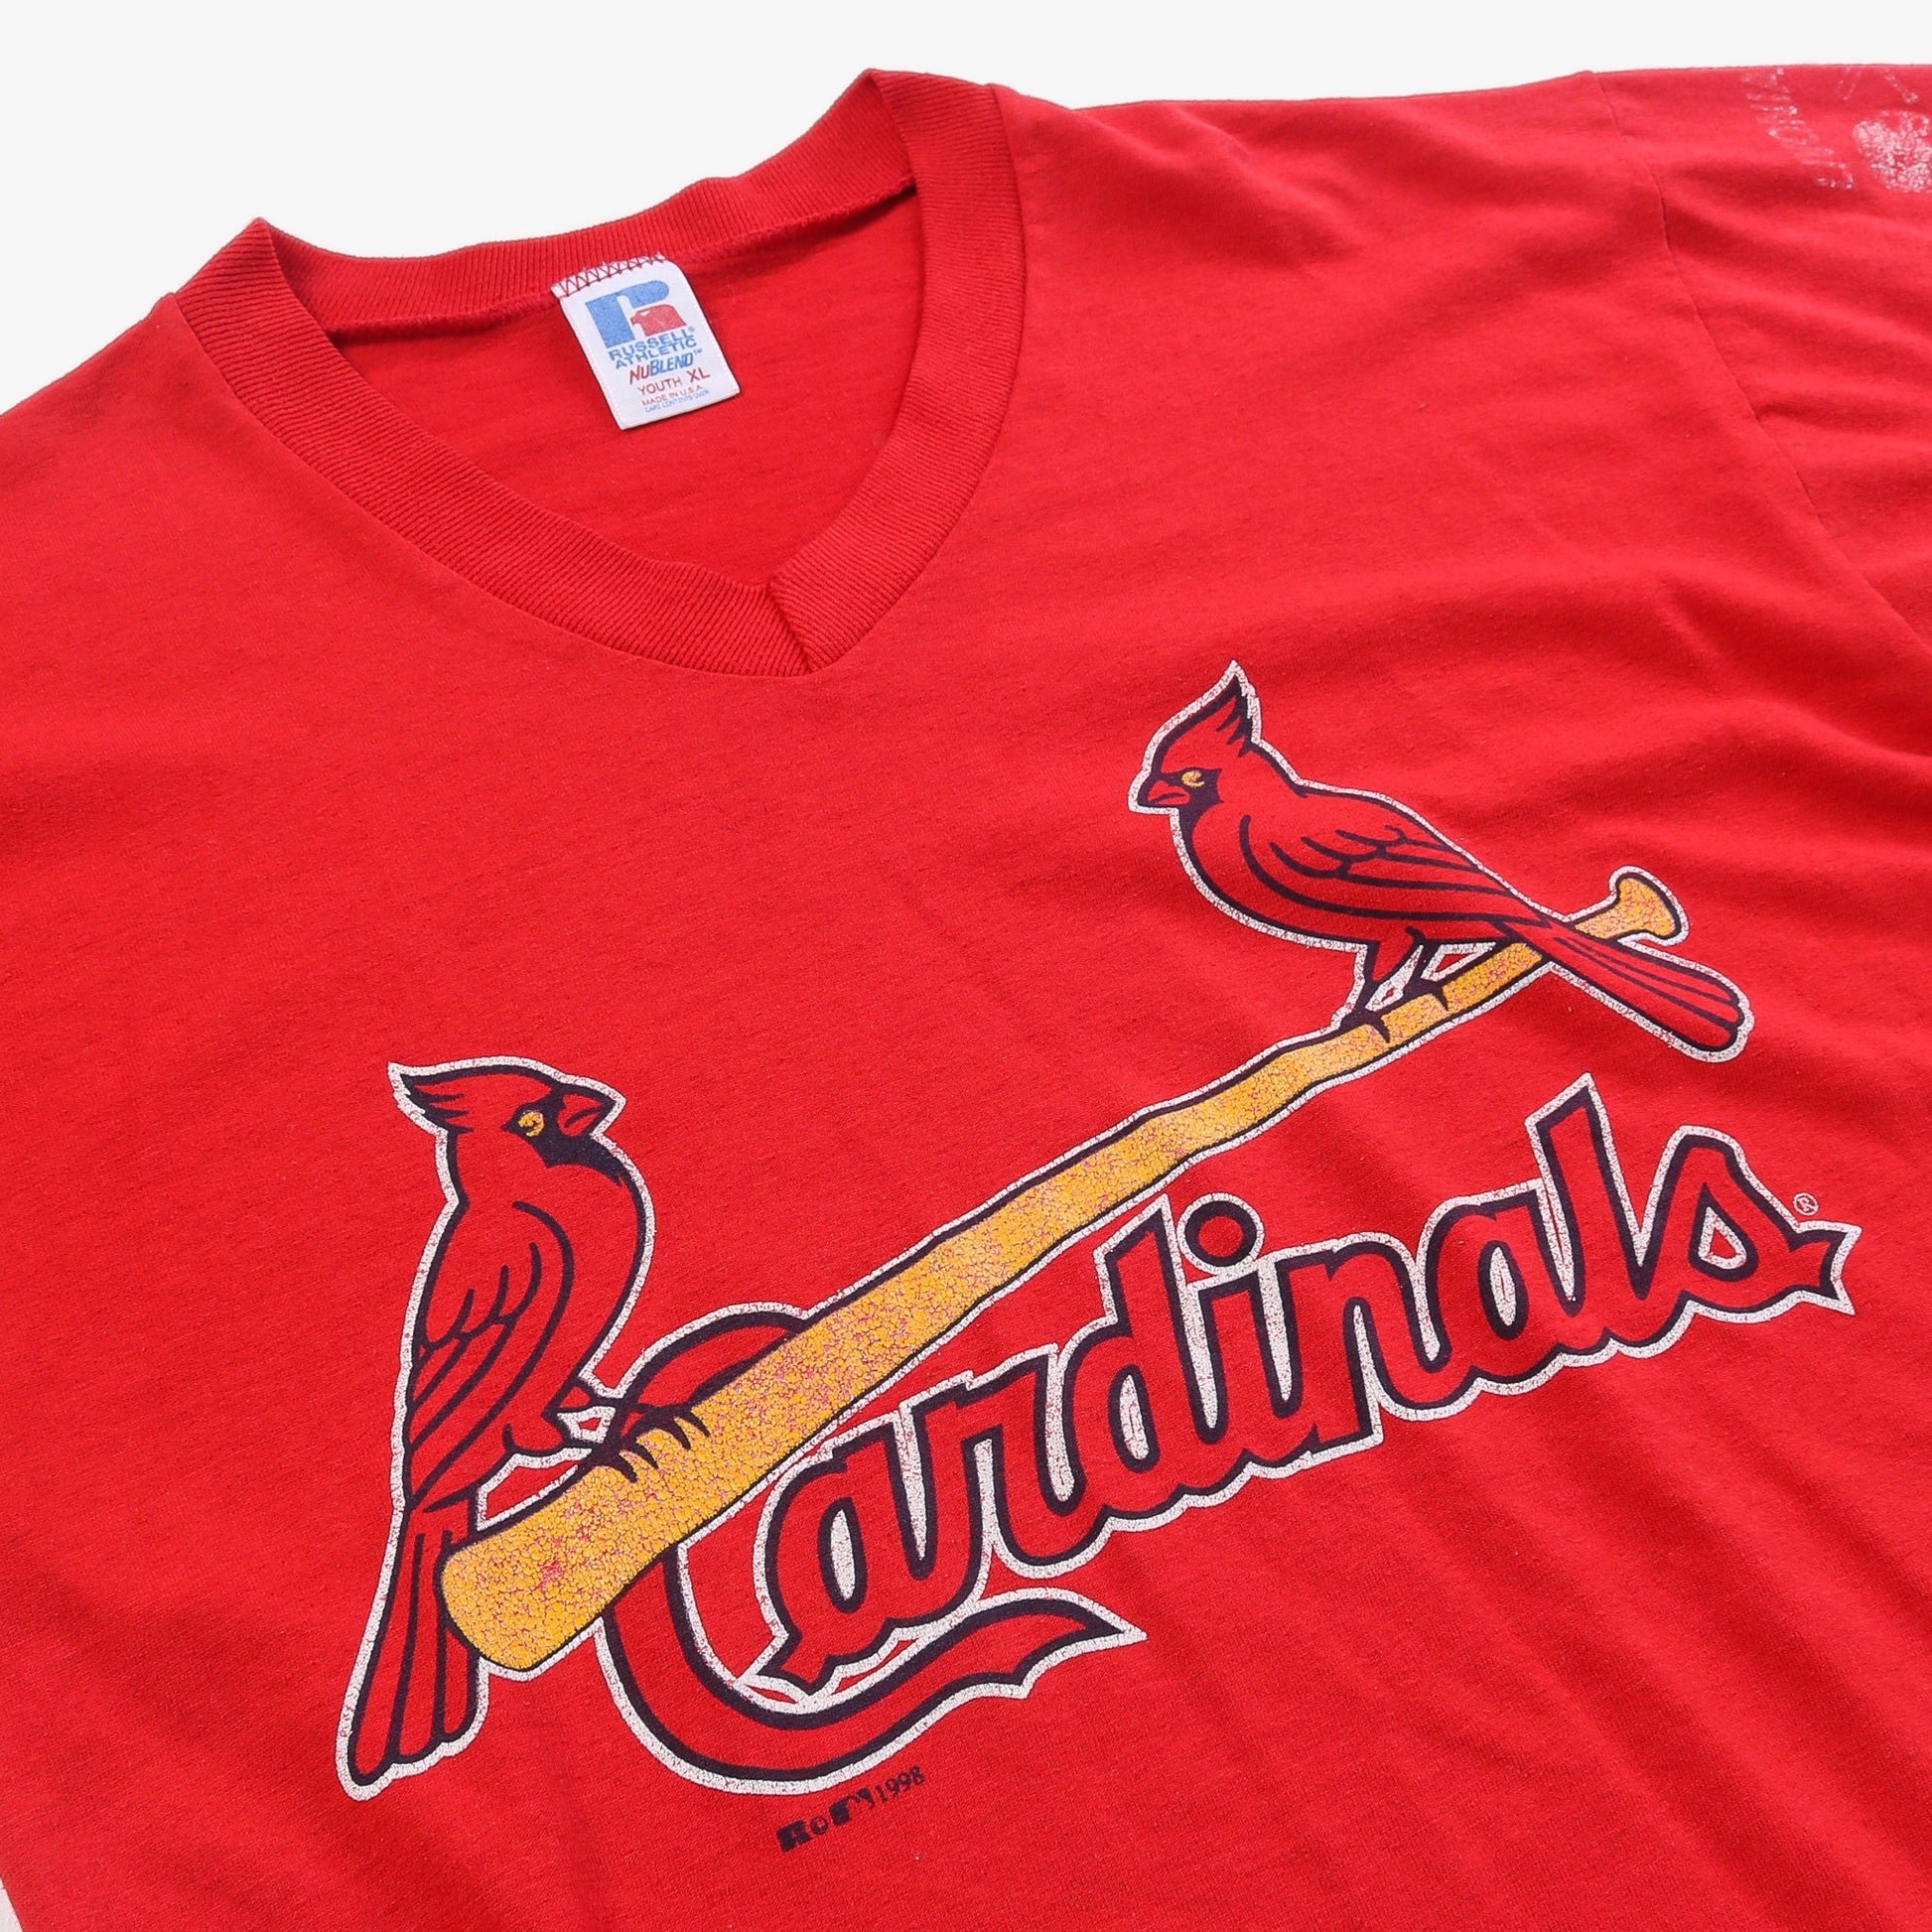 Vintage 'Cardinals' T-shirt